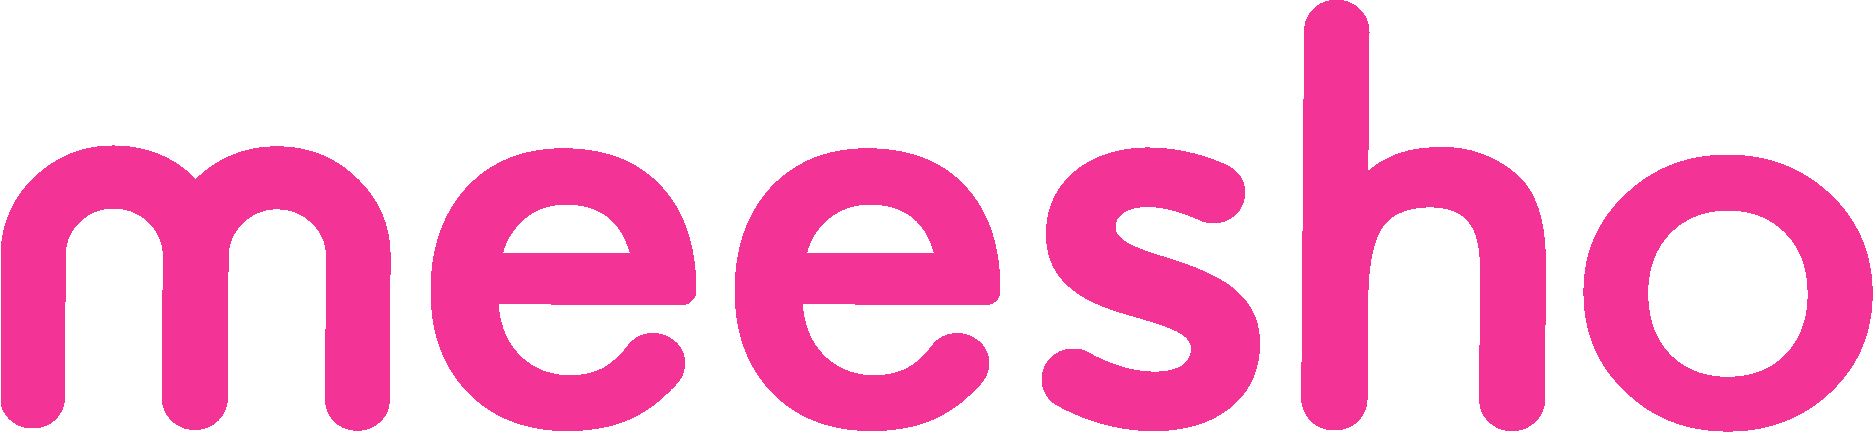 Meesho-Logo-Vector.svg-